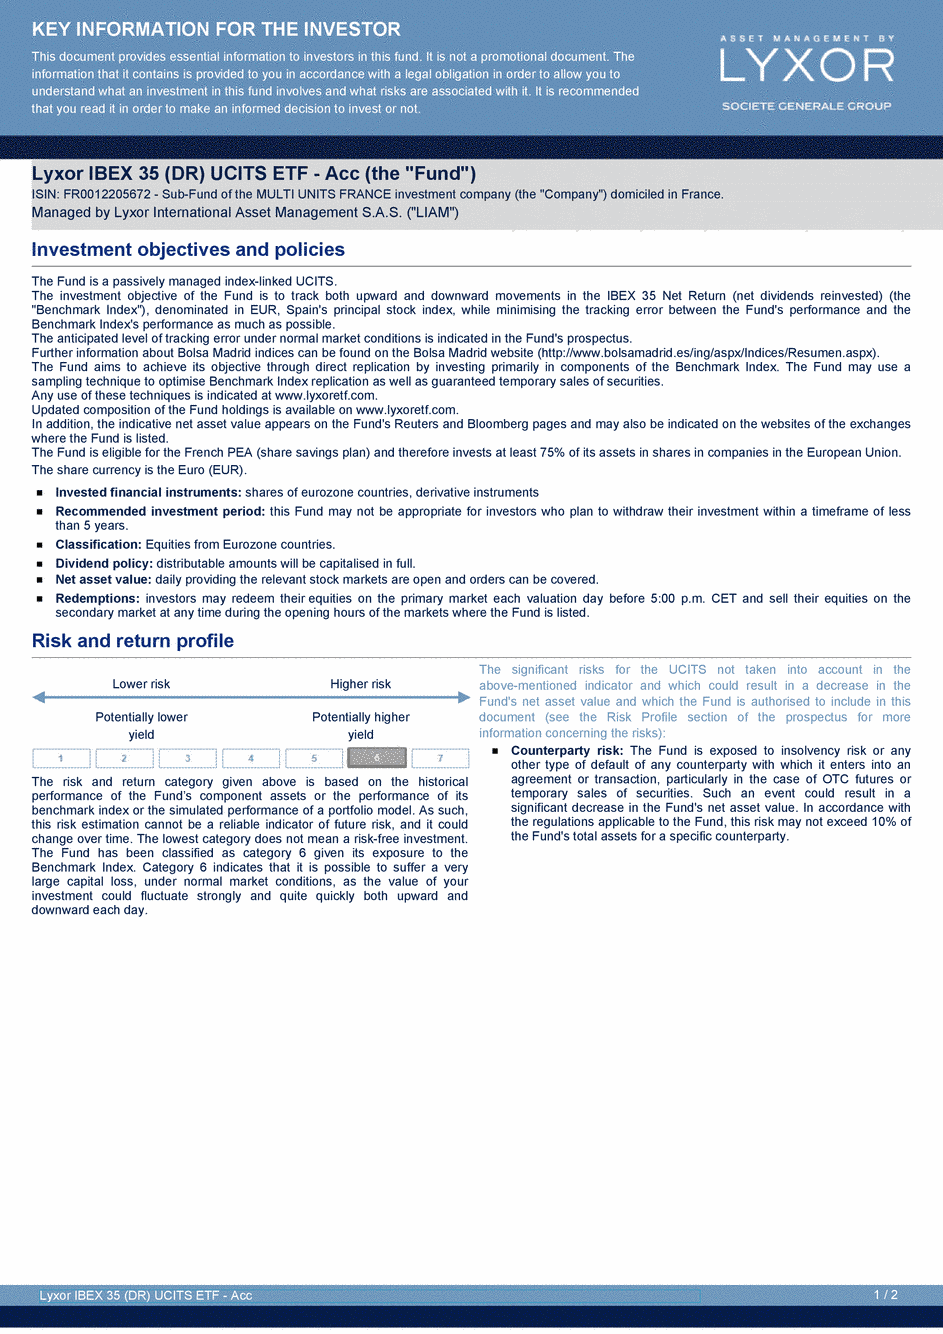 DICI LYXOR IBEX 35 (DR) UCITS ETF (C) - 30/01/2020 - Anglais